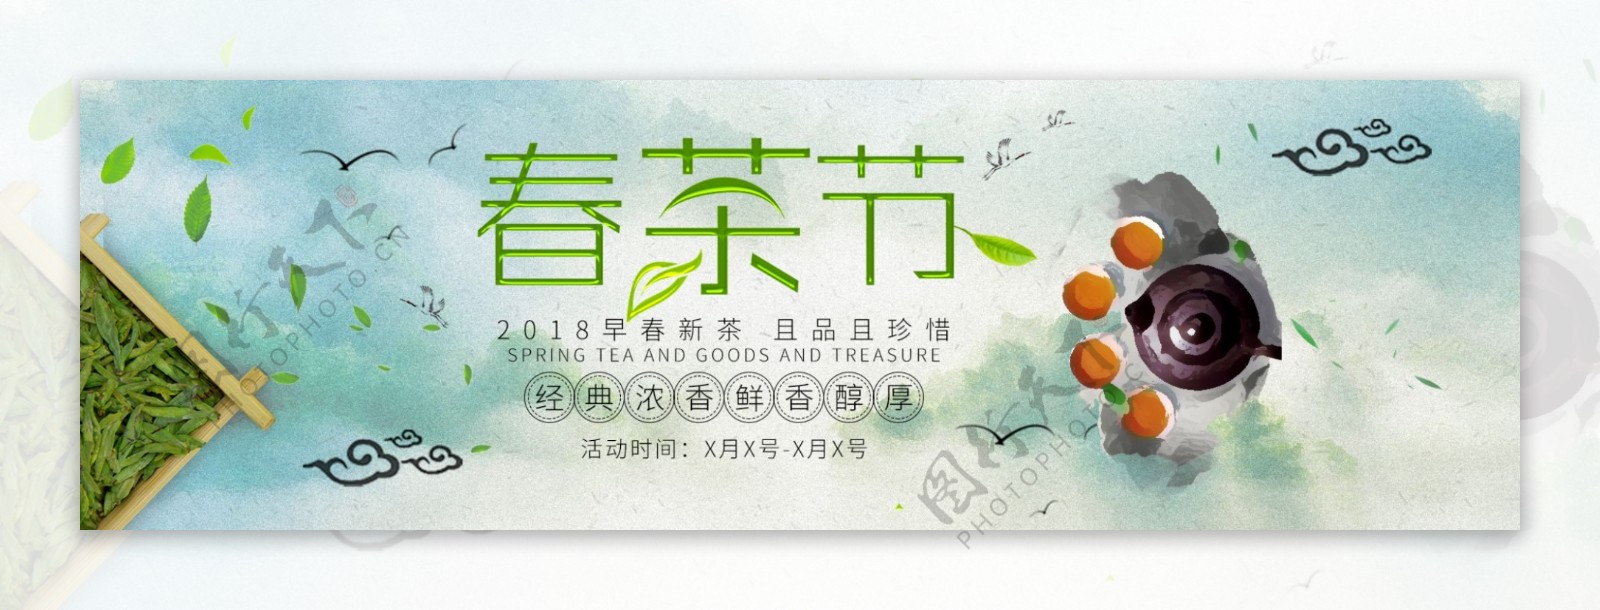 5月春茶节banner背景海报